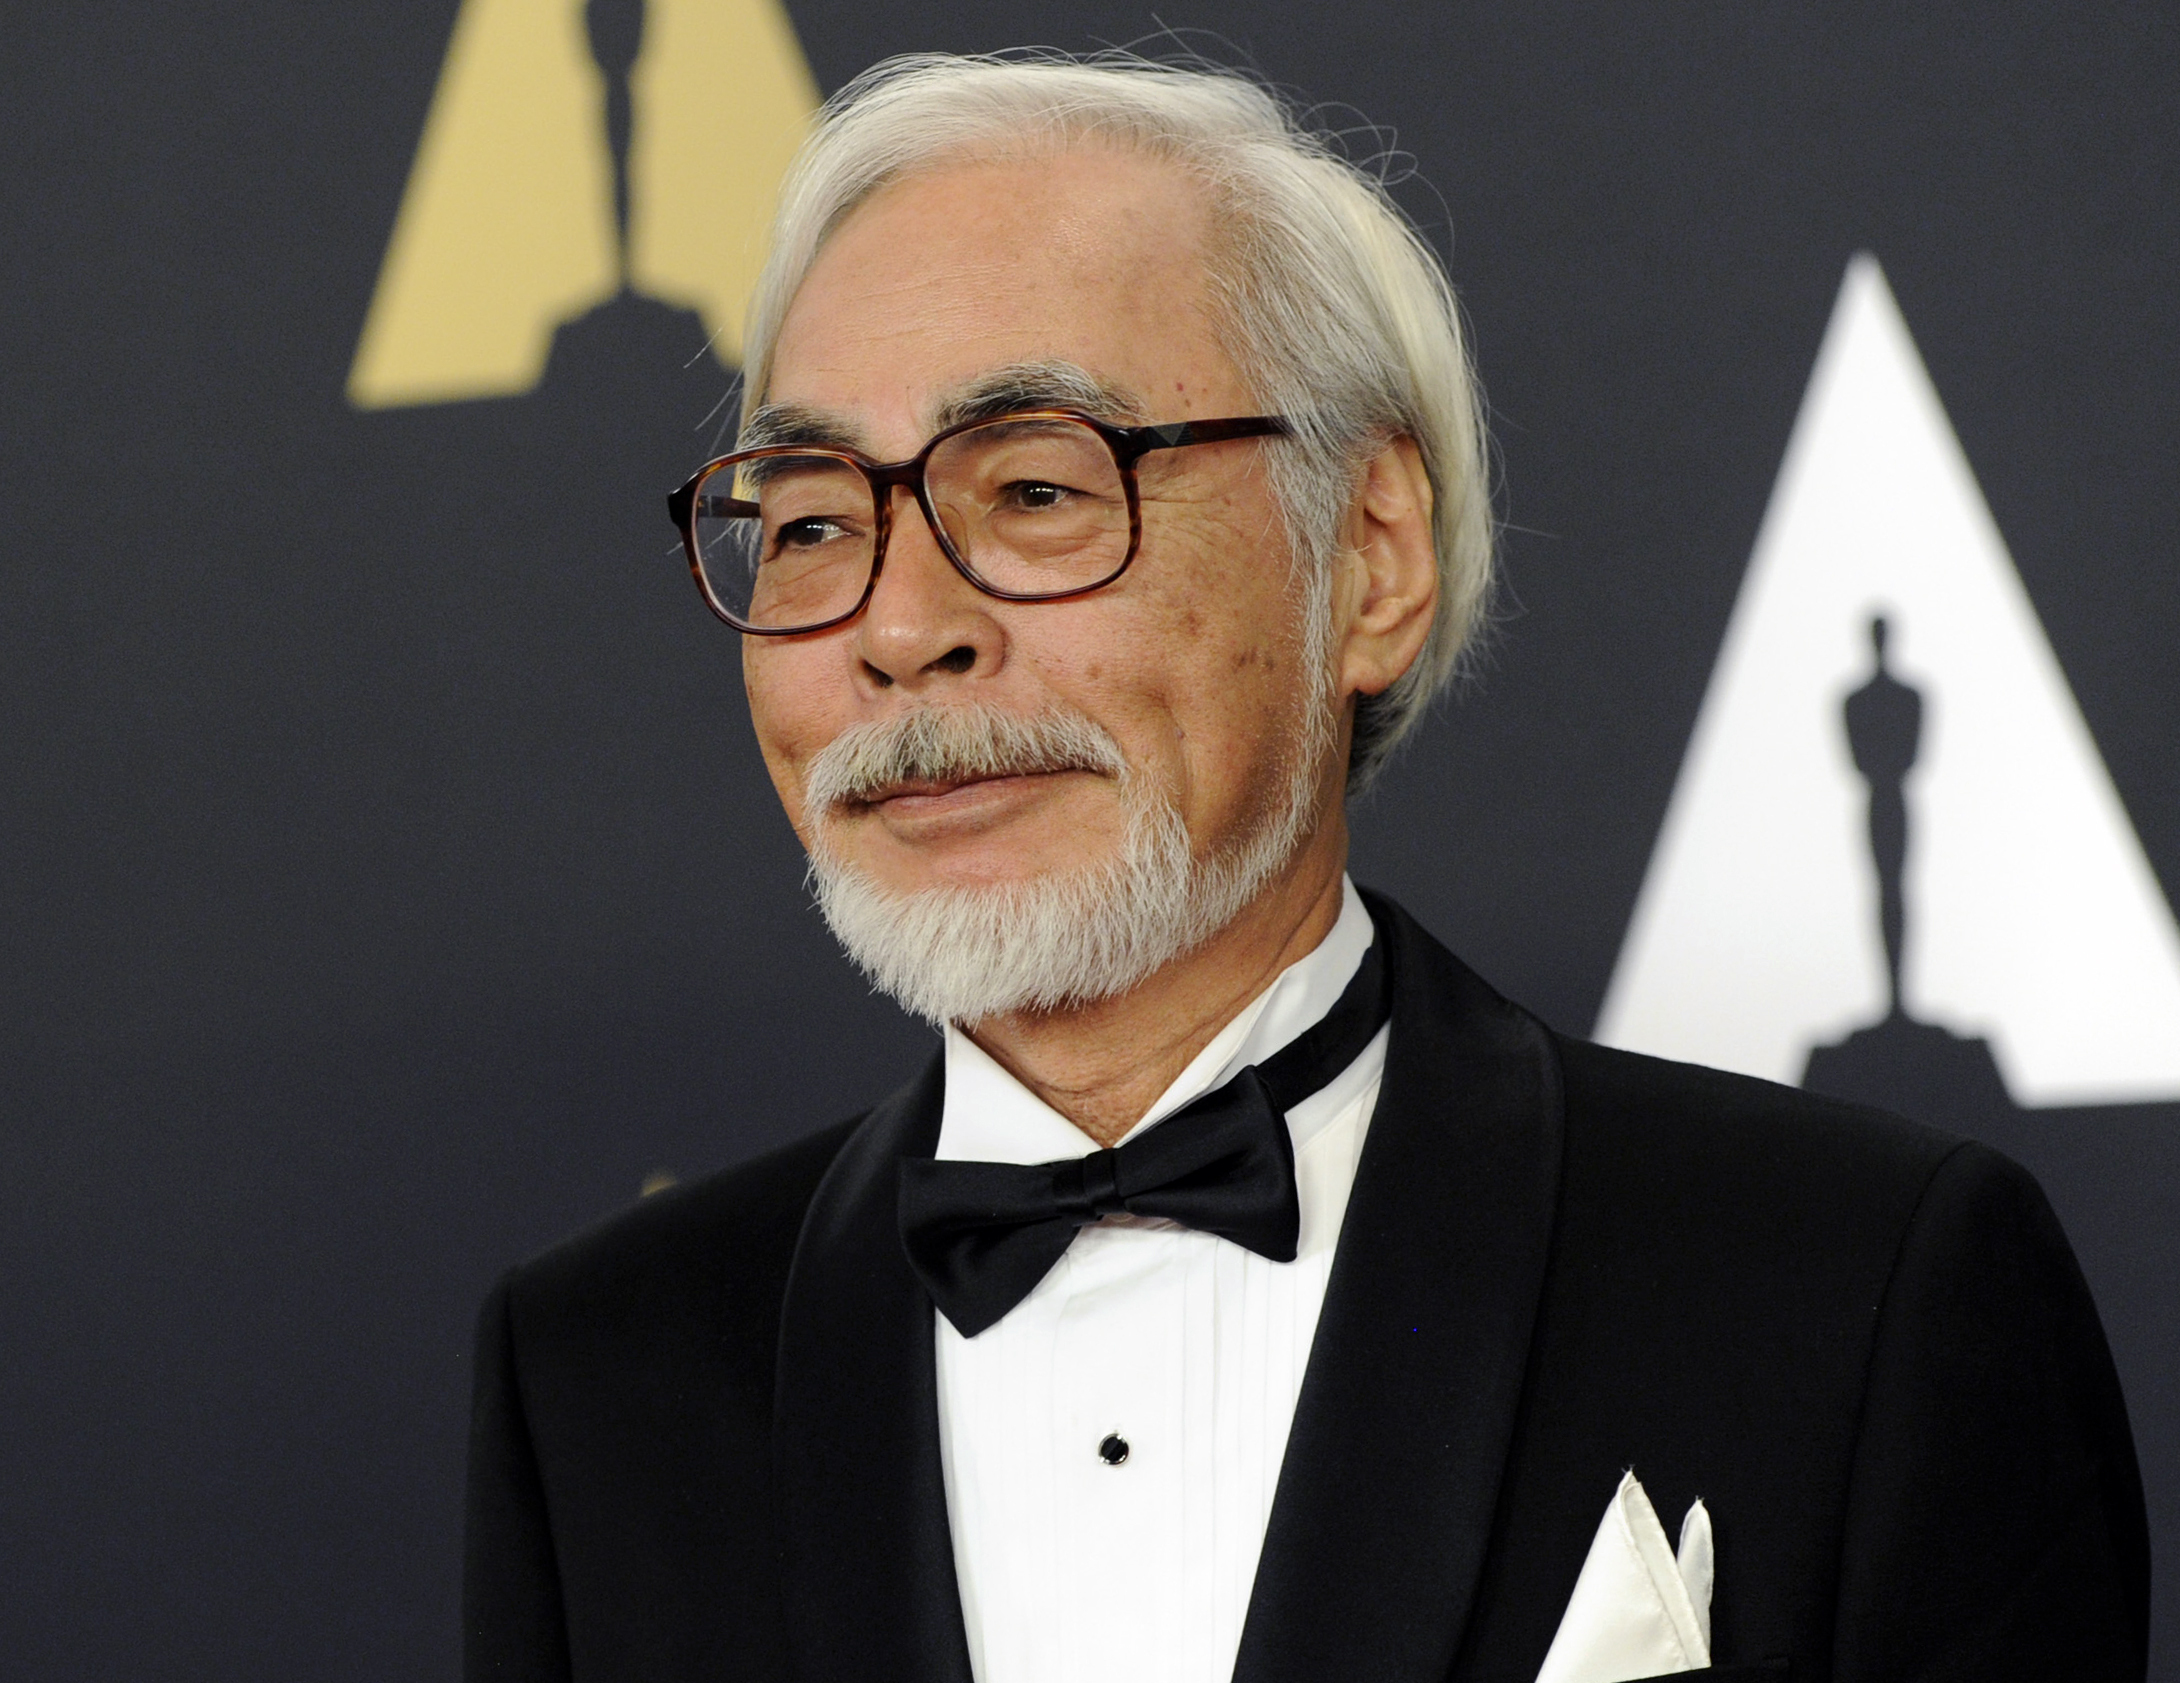 Boy And Heron Trailer: Hayao Miyazaki's Final Film To Open Toronto